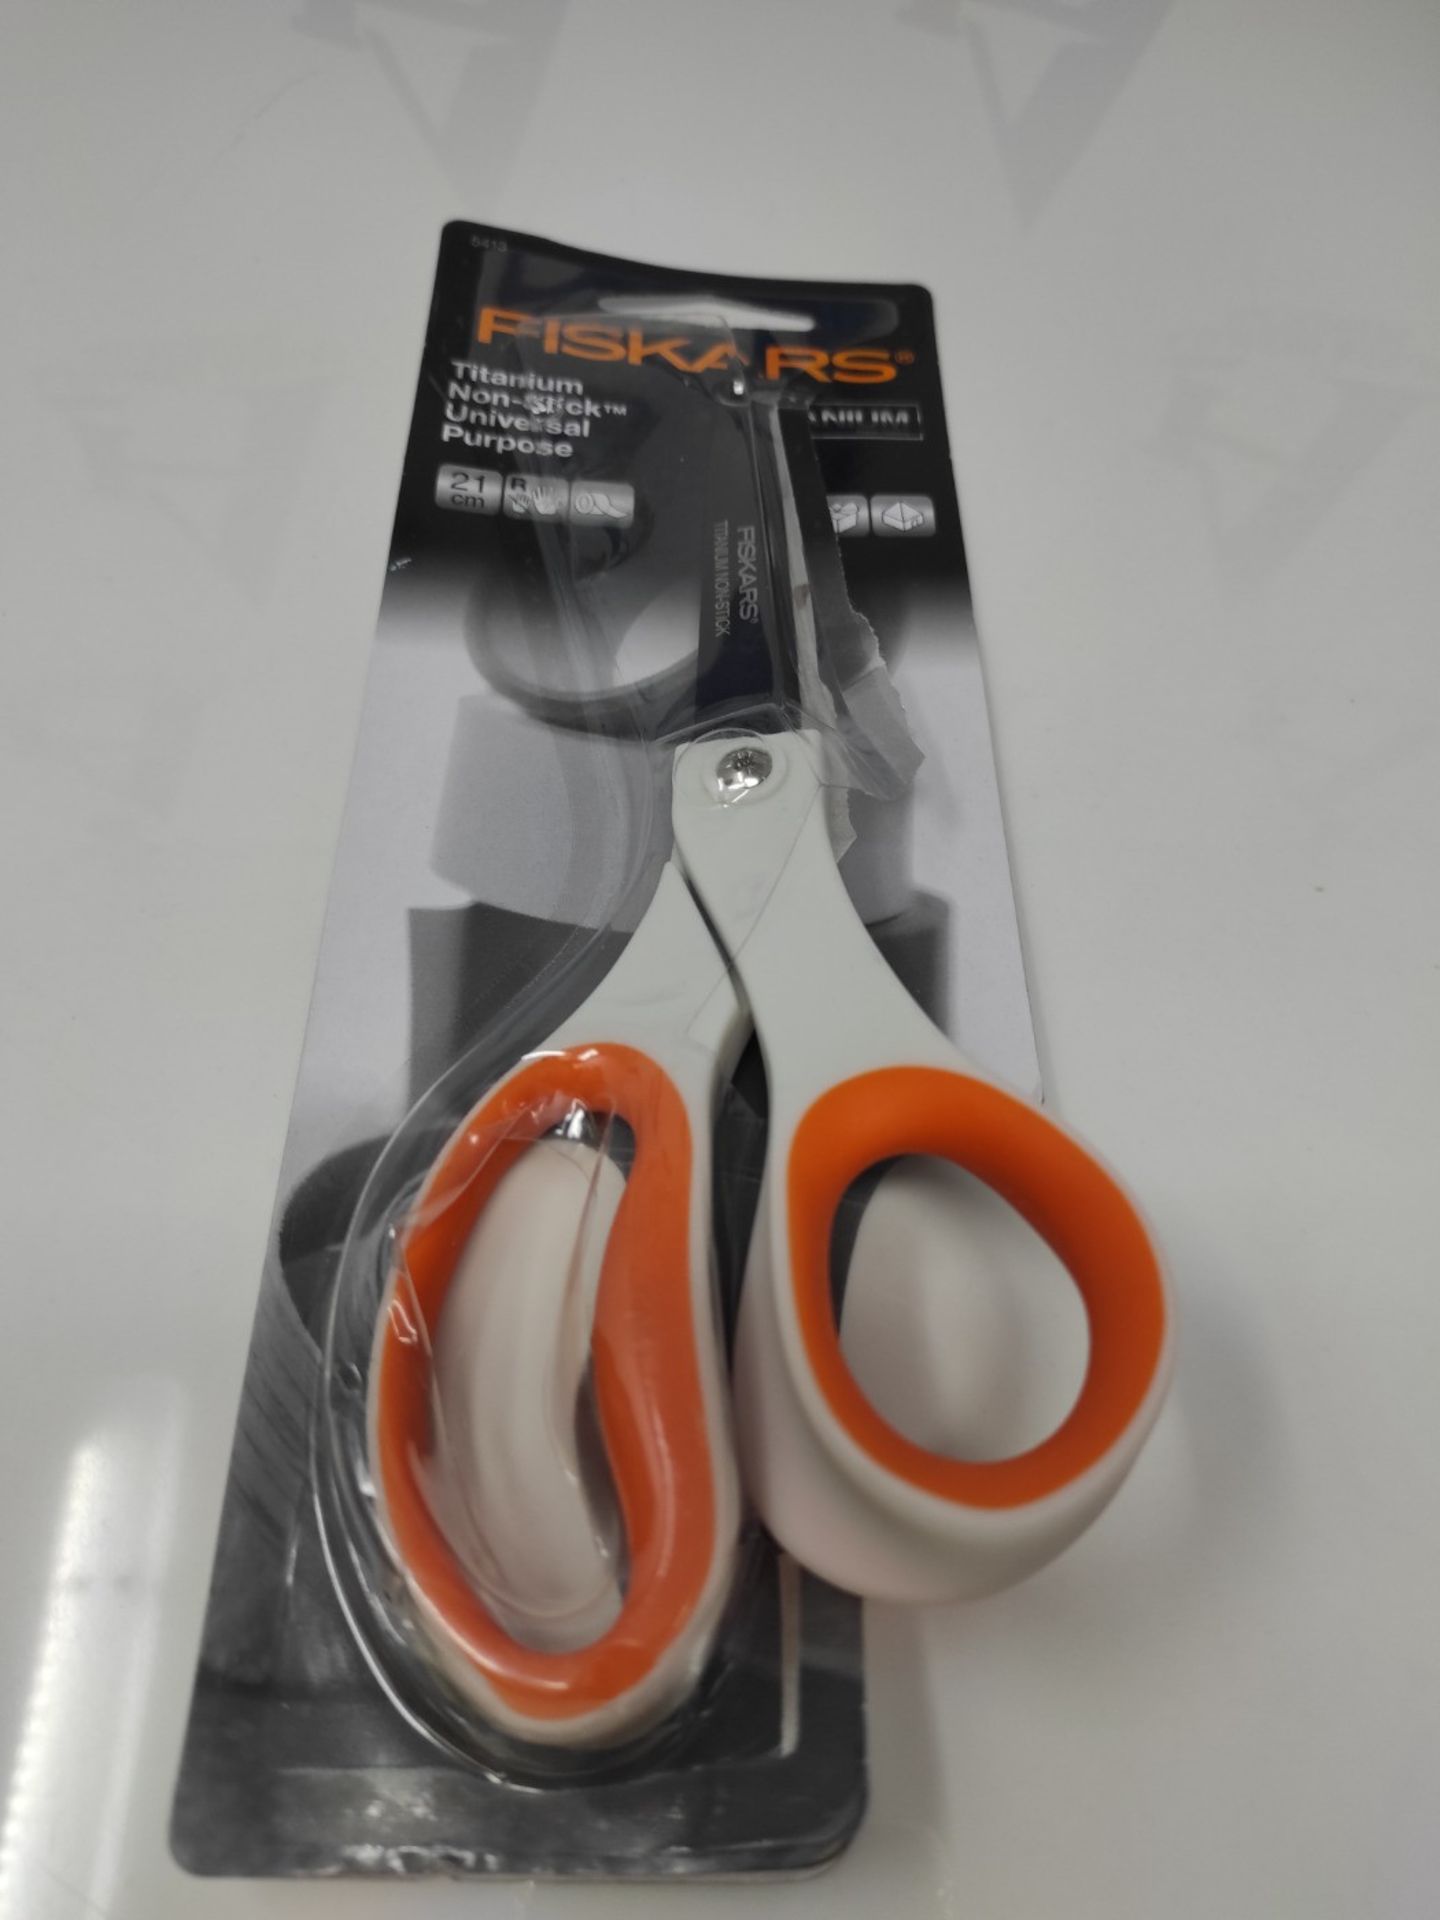 Fiskars Non-stick Universal Scissors, Length: 21 cm, Titanium Coating/Stainless Steel - Image 2 of 2